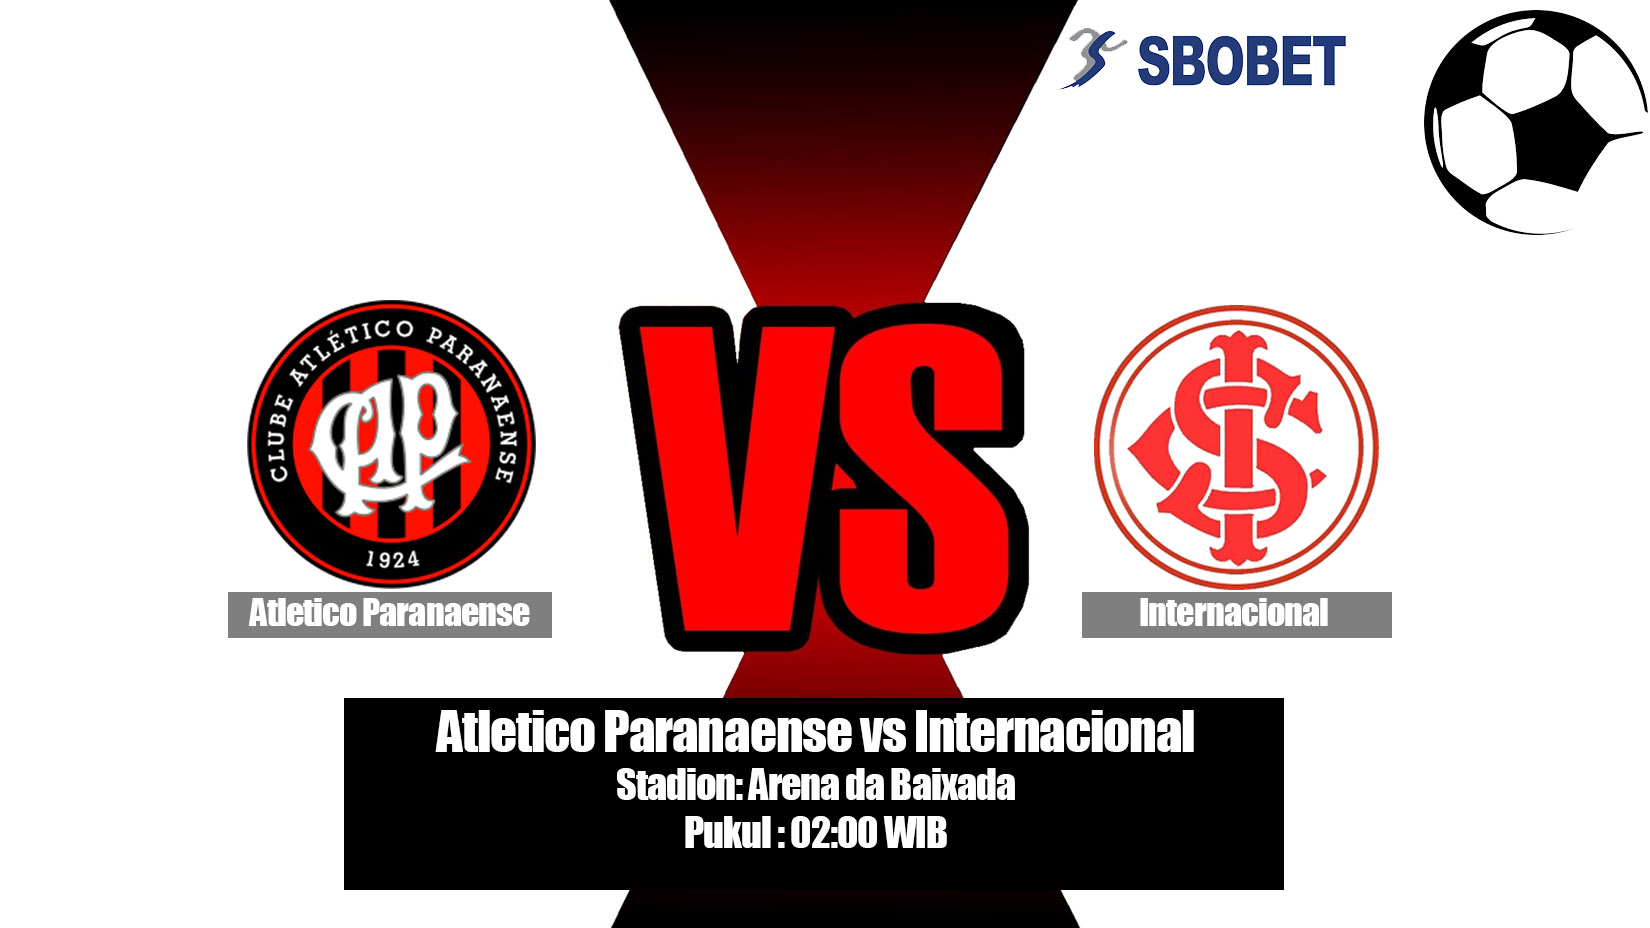 Prediksi Bola Atletico Paranaense vs Internacional 15 Juli 2019